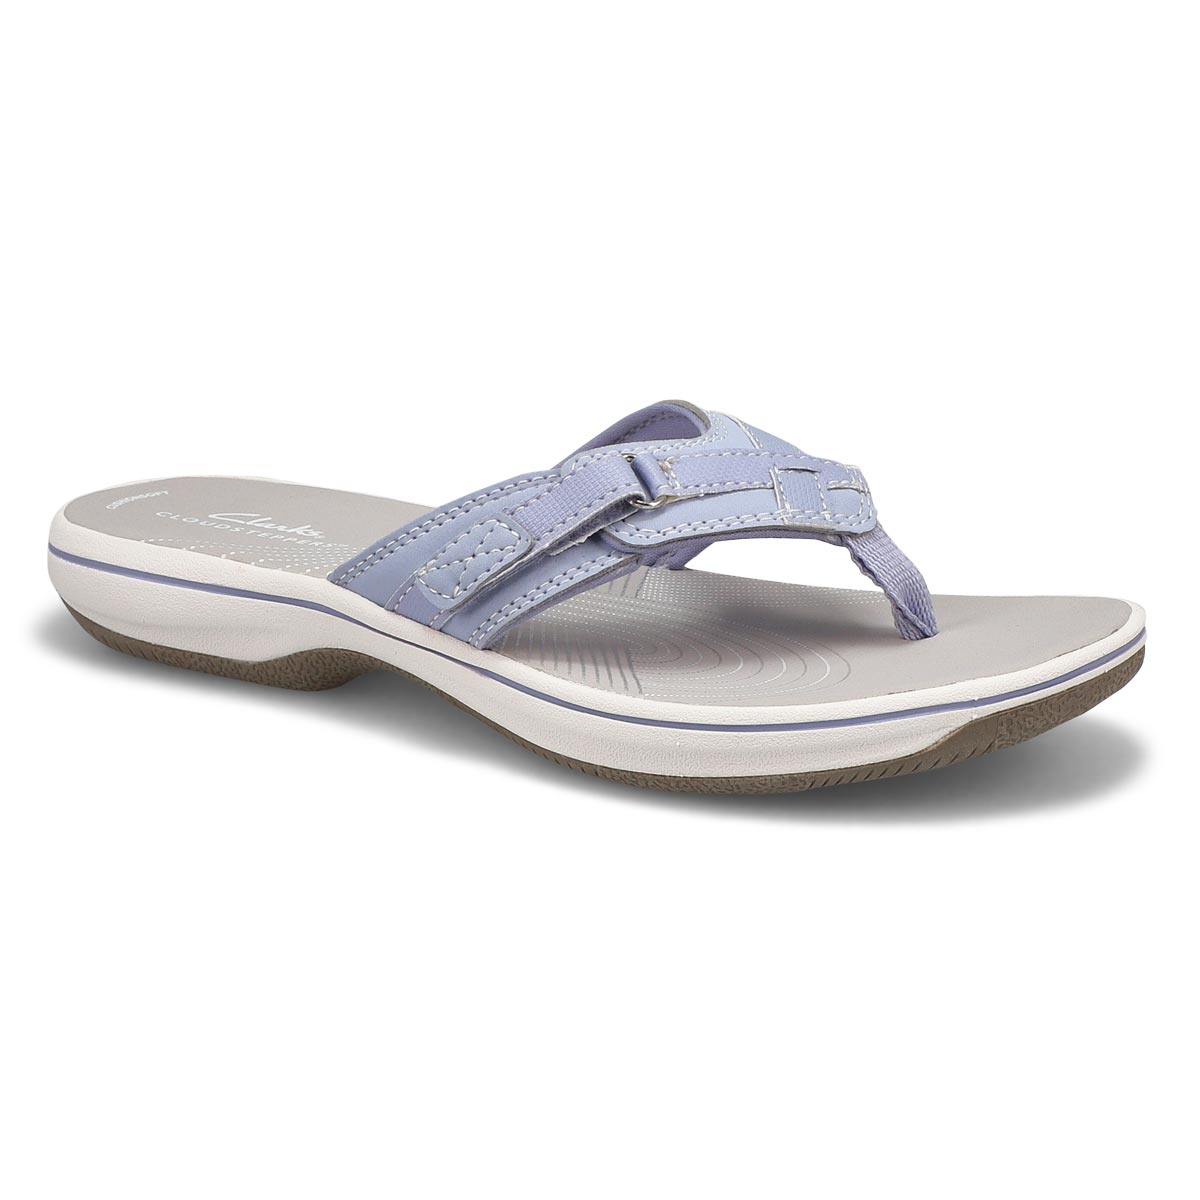 Clarks Women's Breeze Sea Thong Sandal - Lave | SoftMoc.com